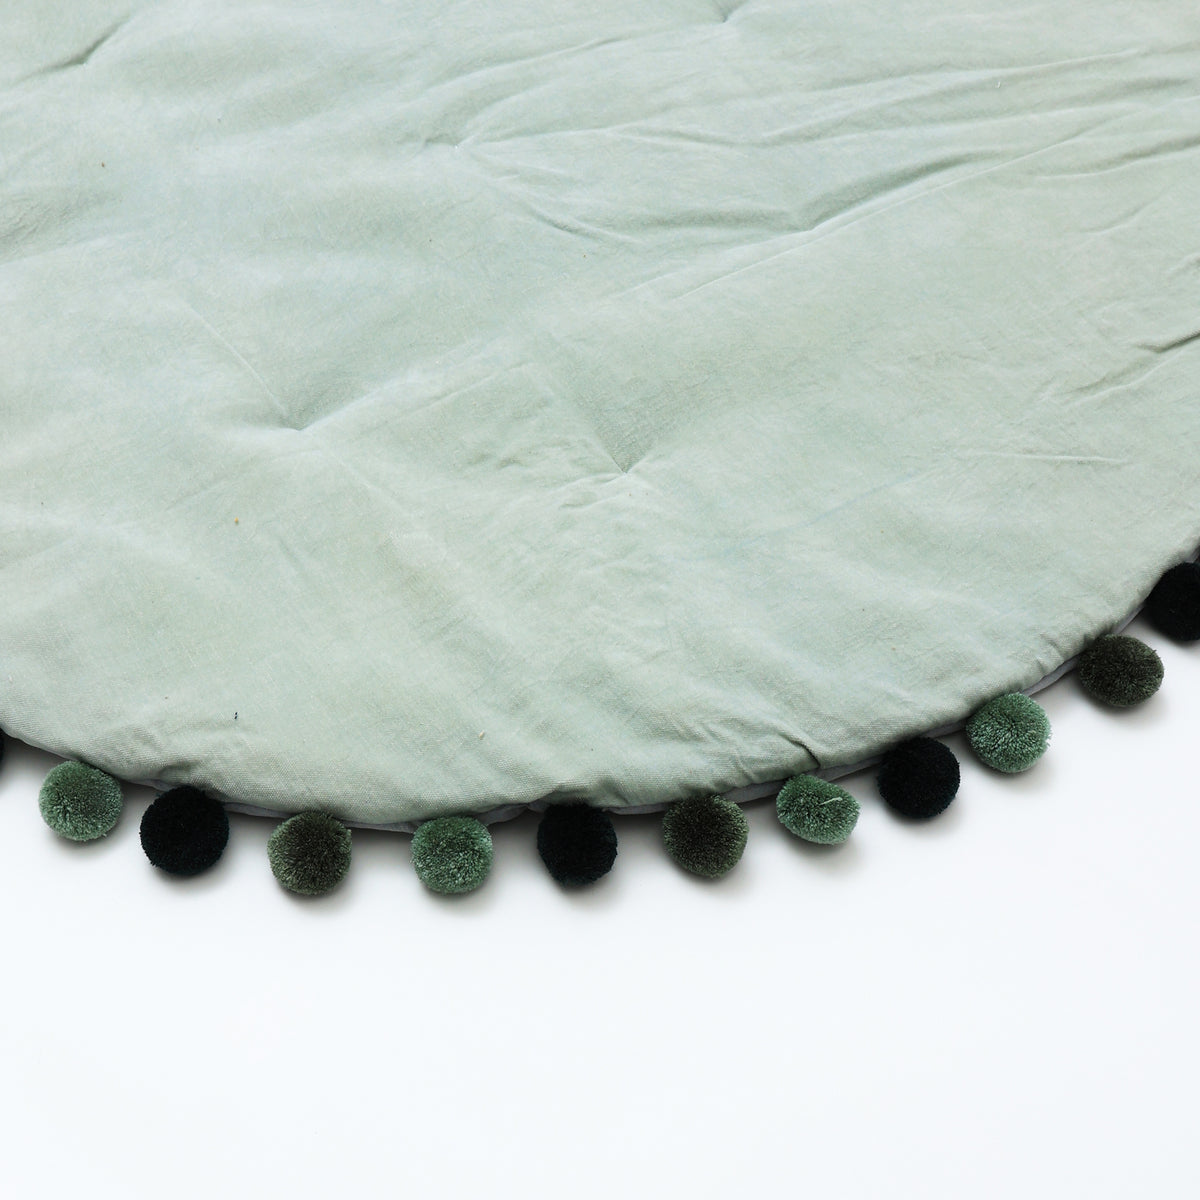 Cotton Soft & Fine Velvet Round Playmat with Pom Pom (Light Green)